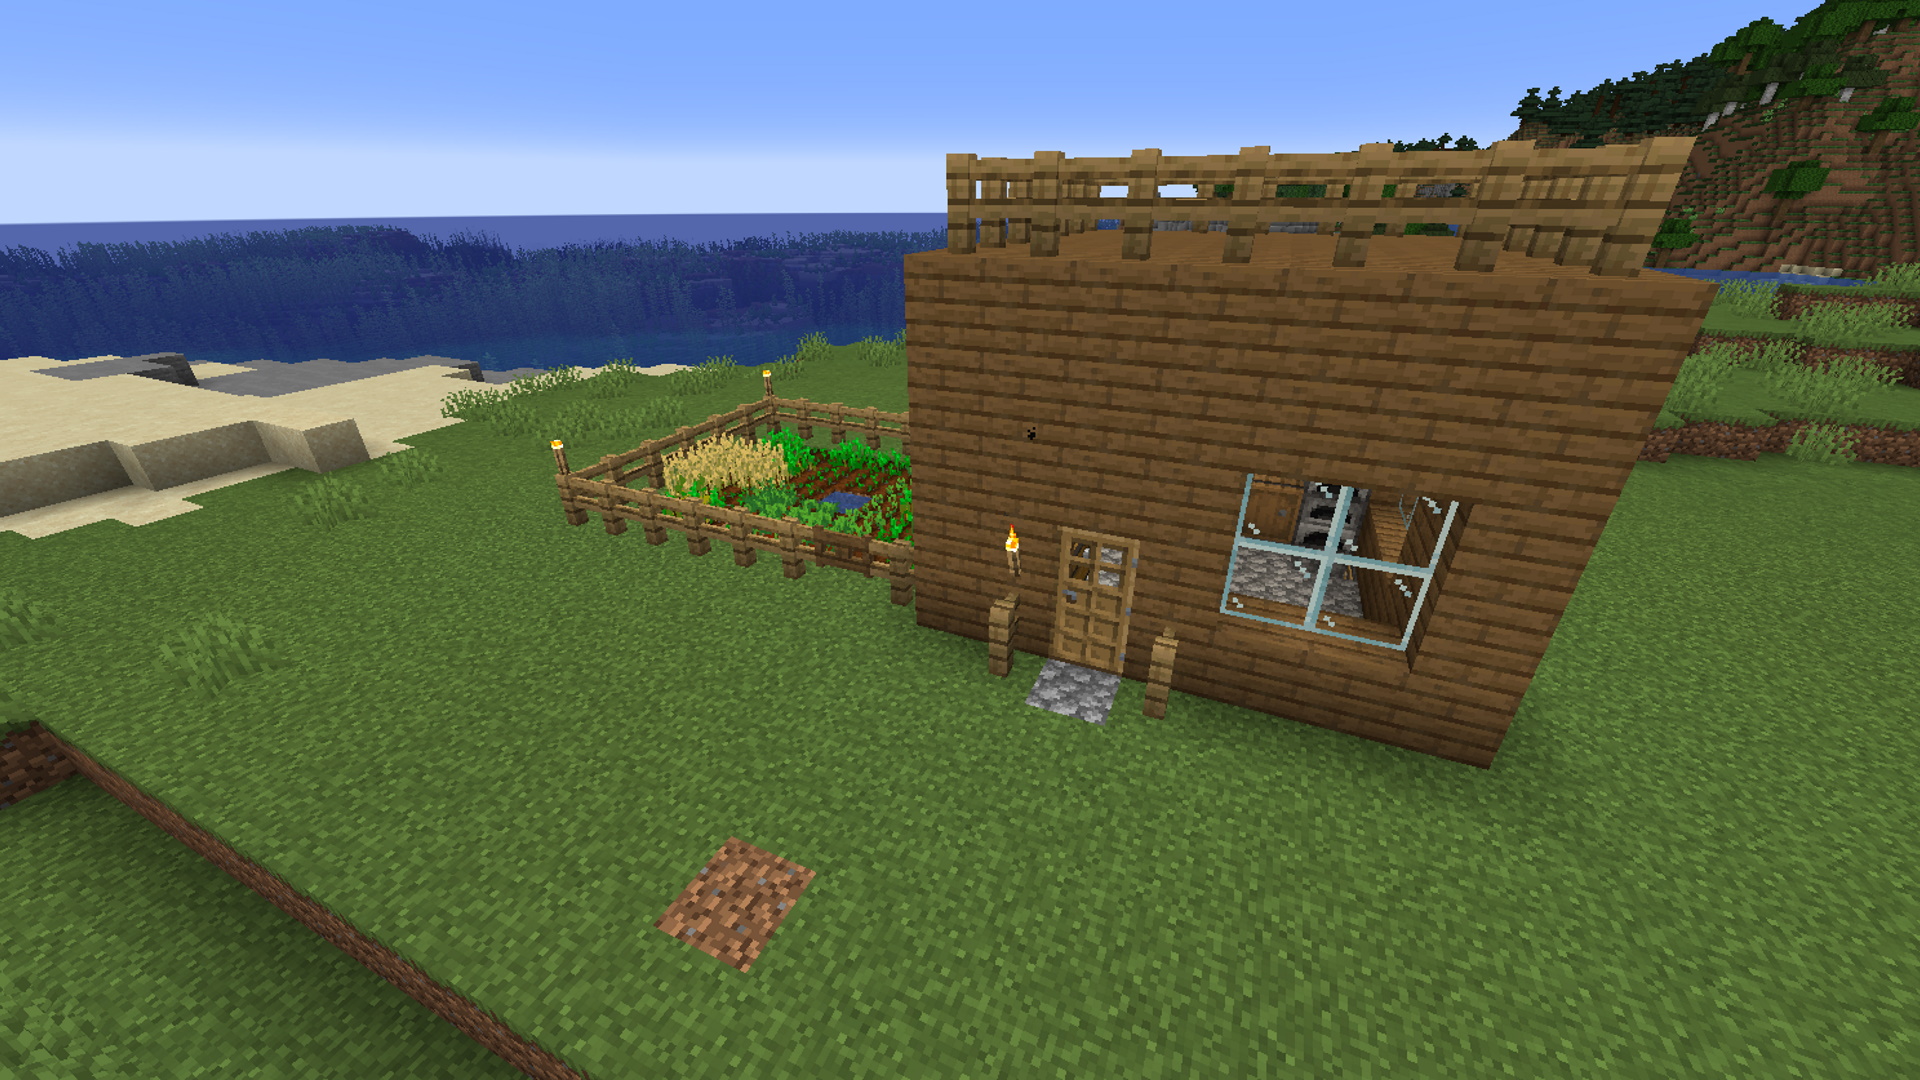 Minecraft house - a luxury Minecraft house with a garden